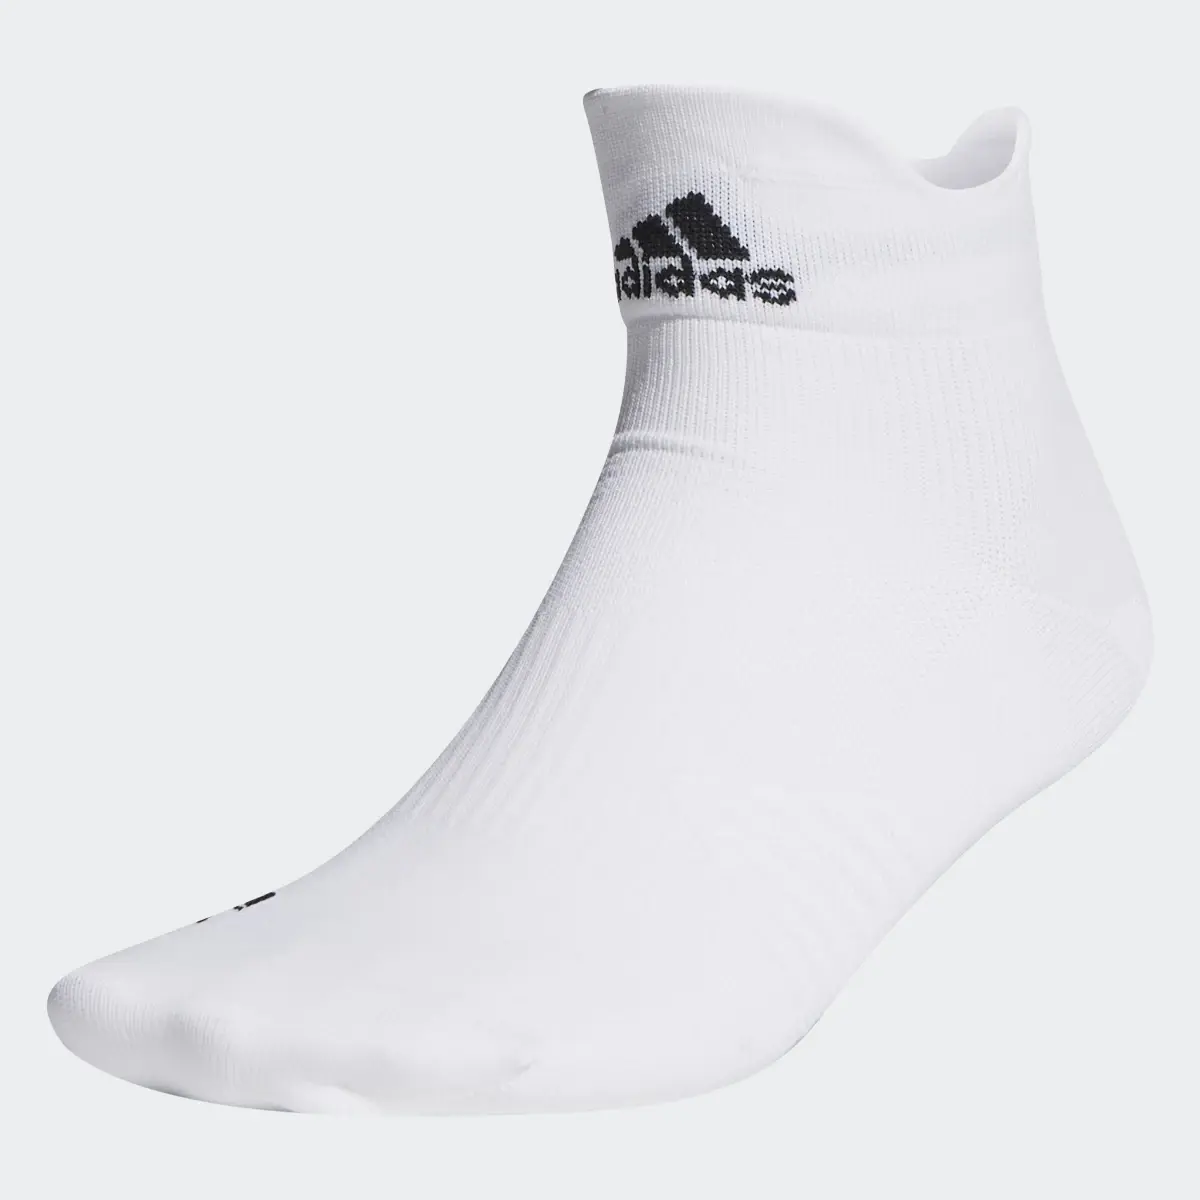 Adidas Ankle Performance Running Socks. 2